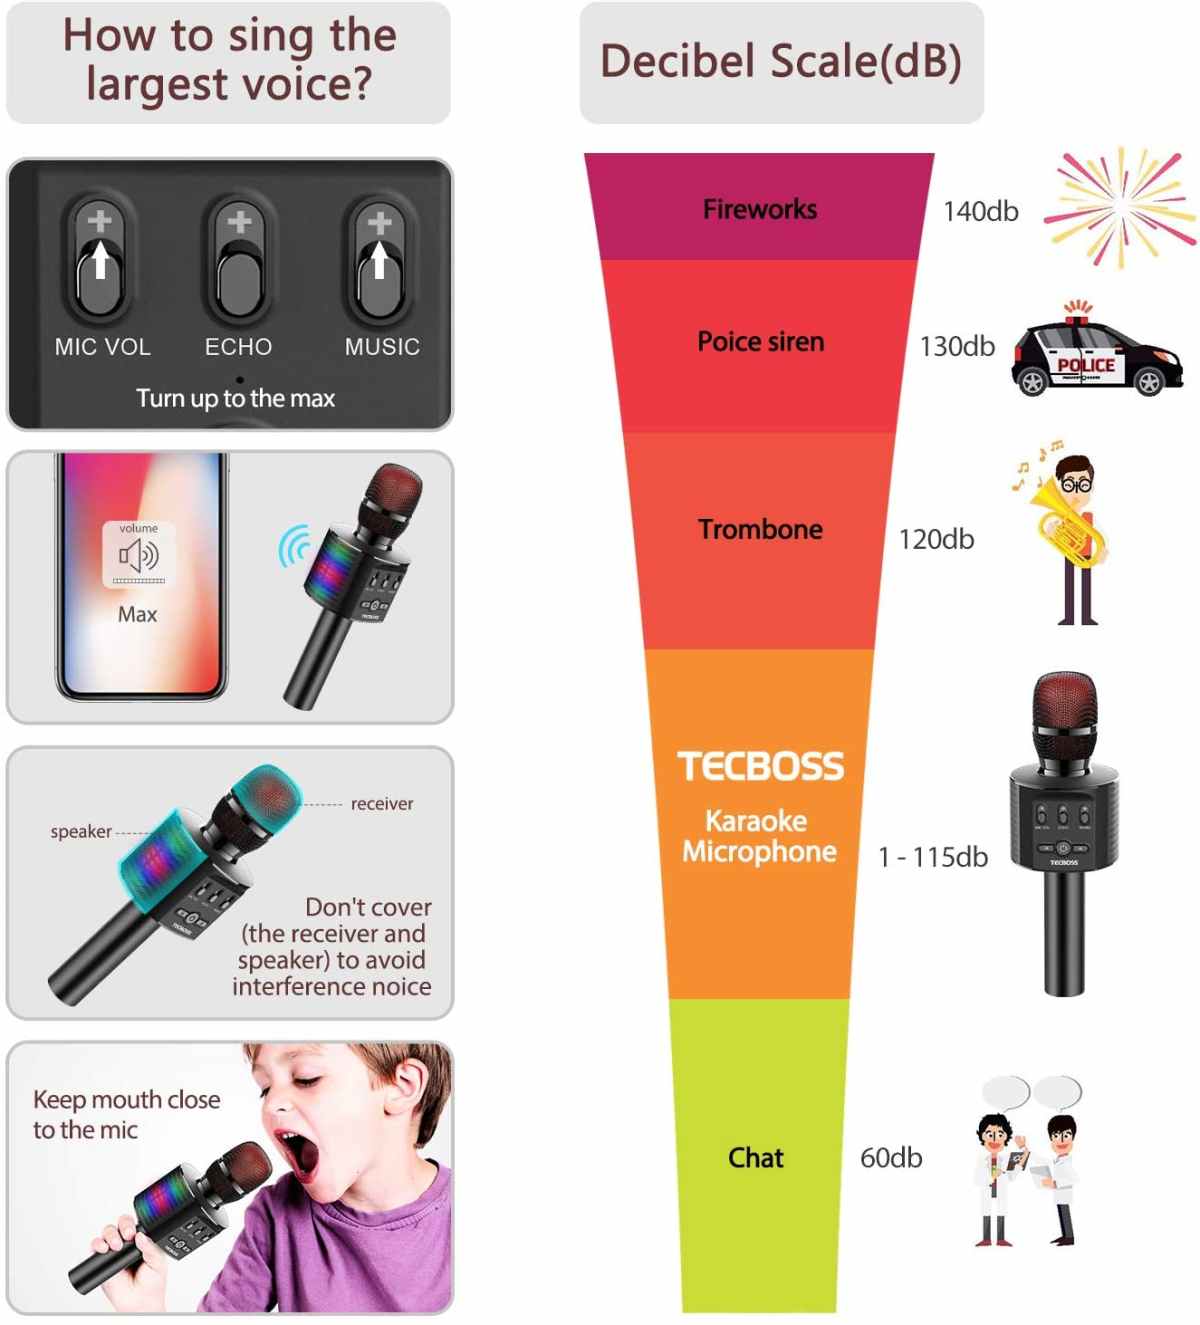 Karaoke microphone(Black)